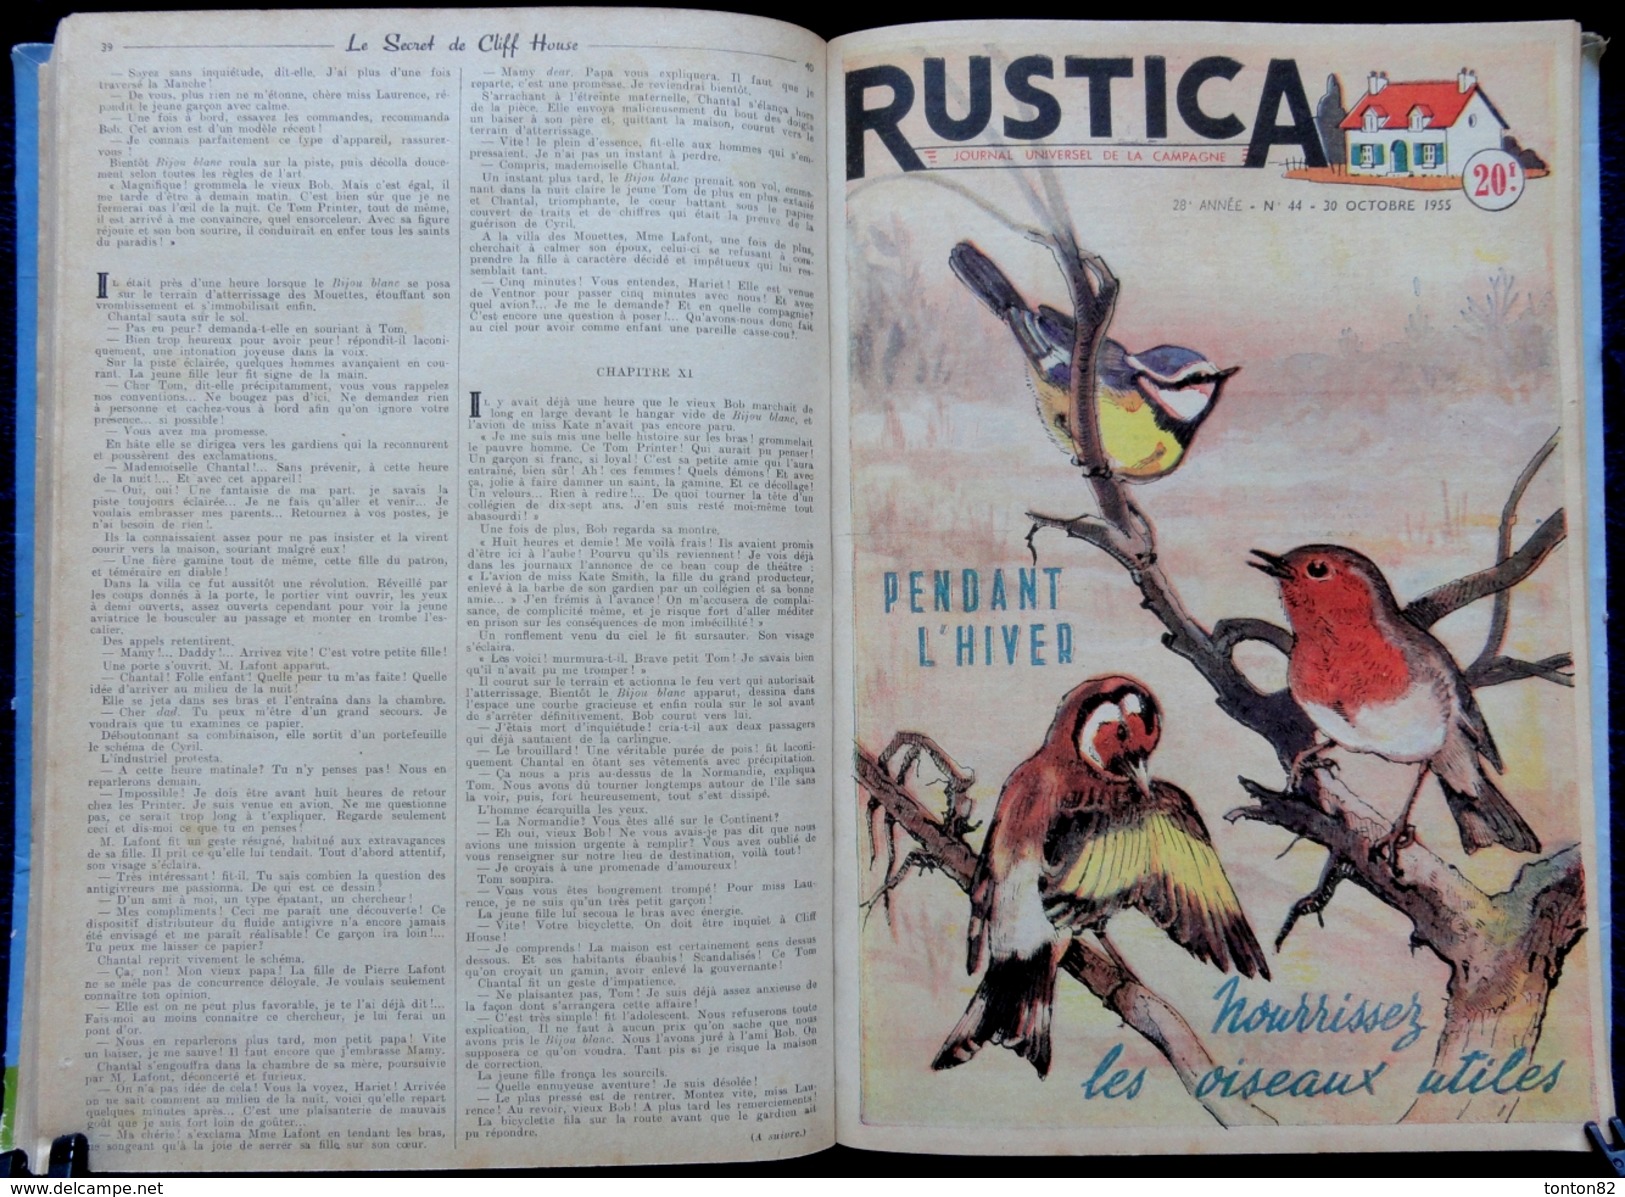 RUSTICA - Album série n° 6 - ( Année 1955  )